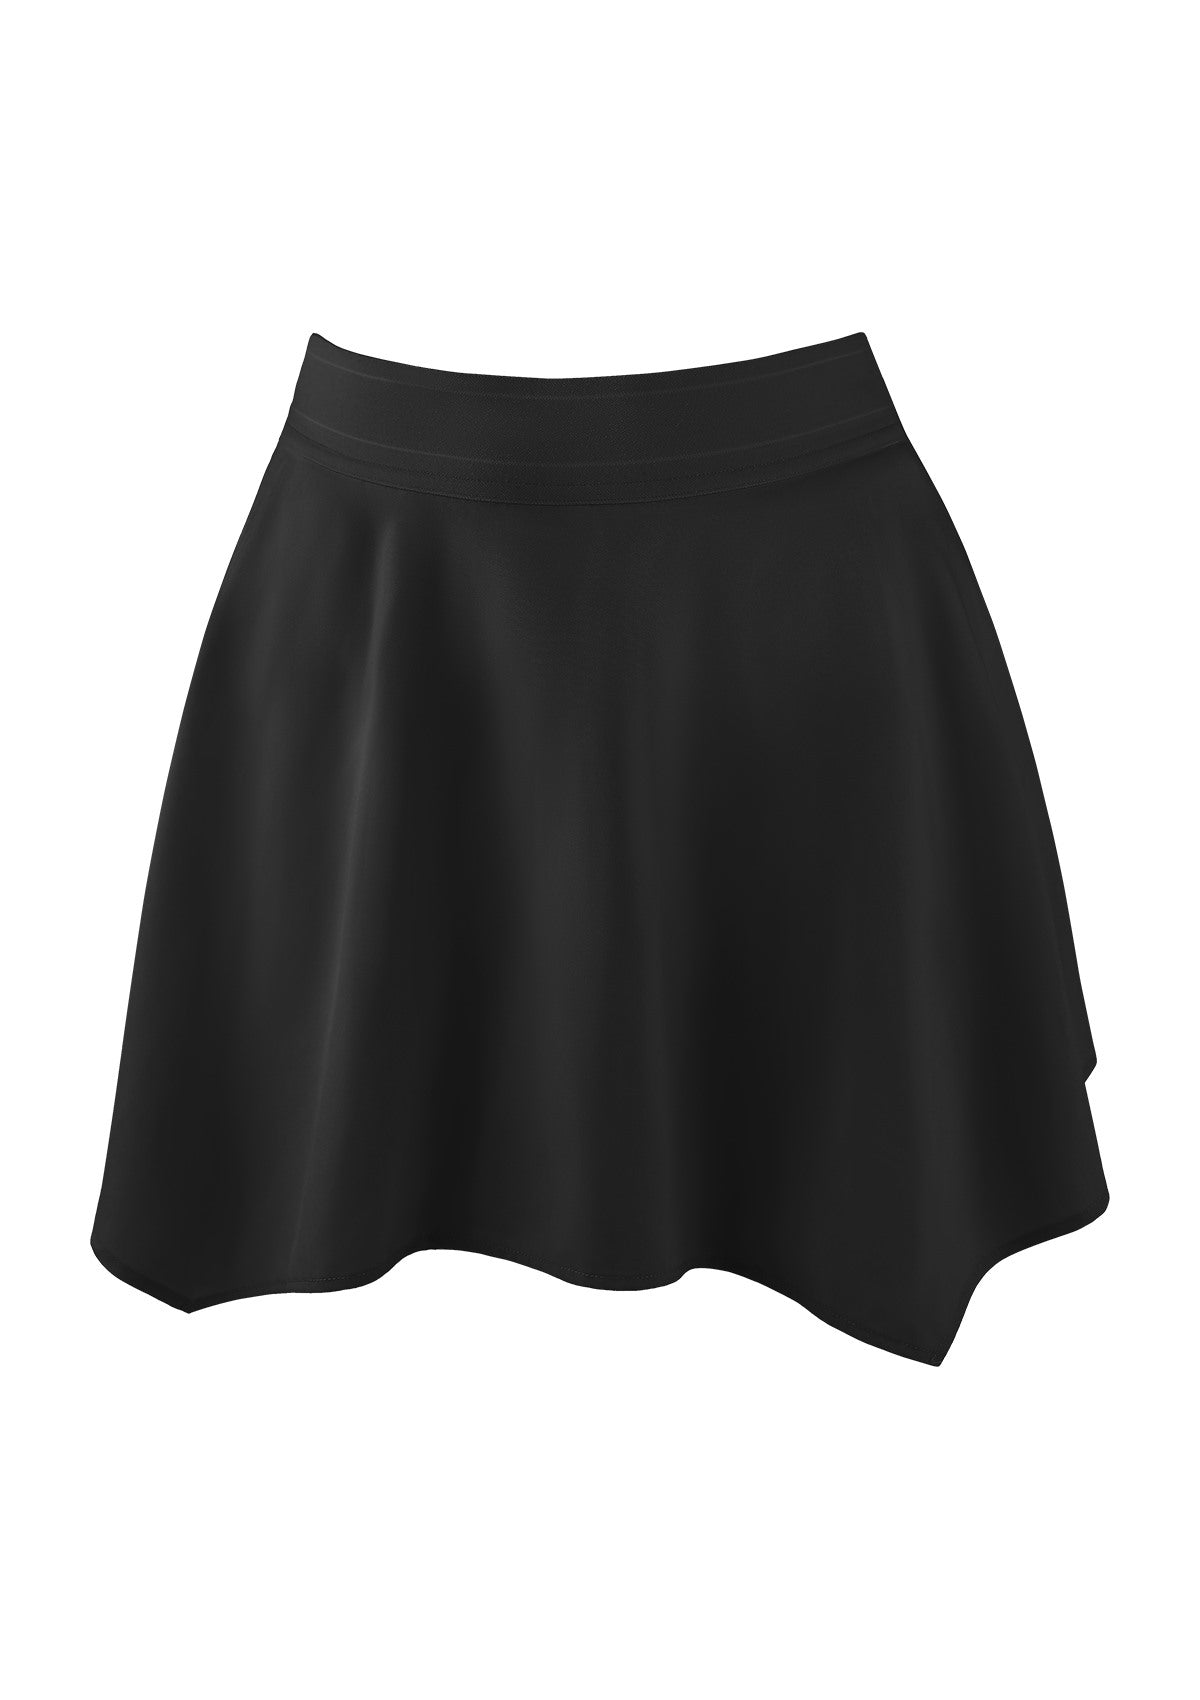 Speed Race High-Rise Sports Tennis Skirt - Black / M